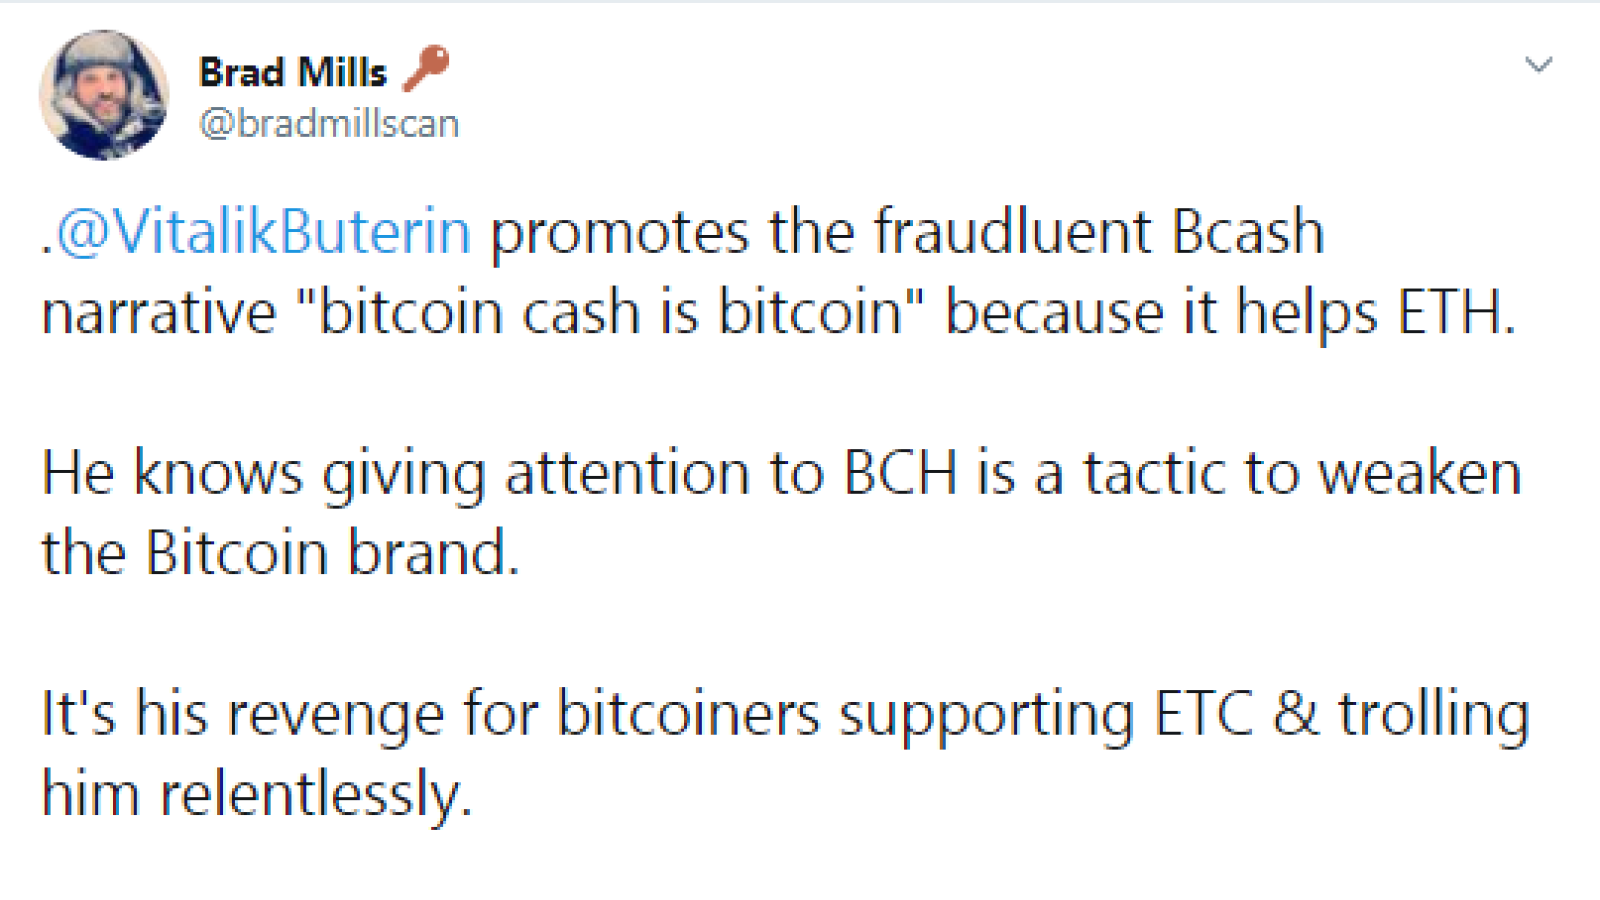 Brad Mills accuses Vitalik Buterin in promoting Bitcoin Cash